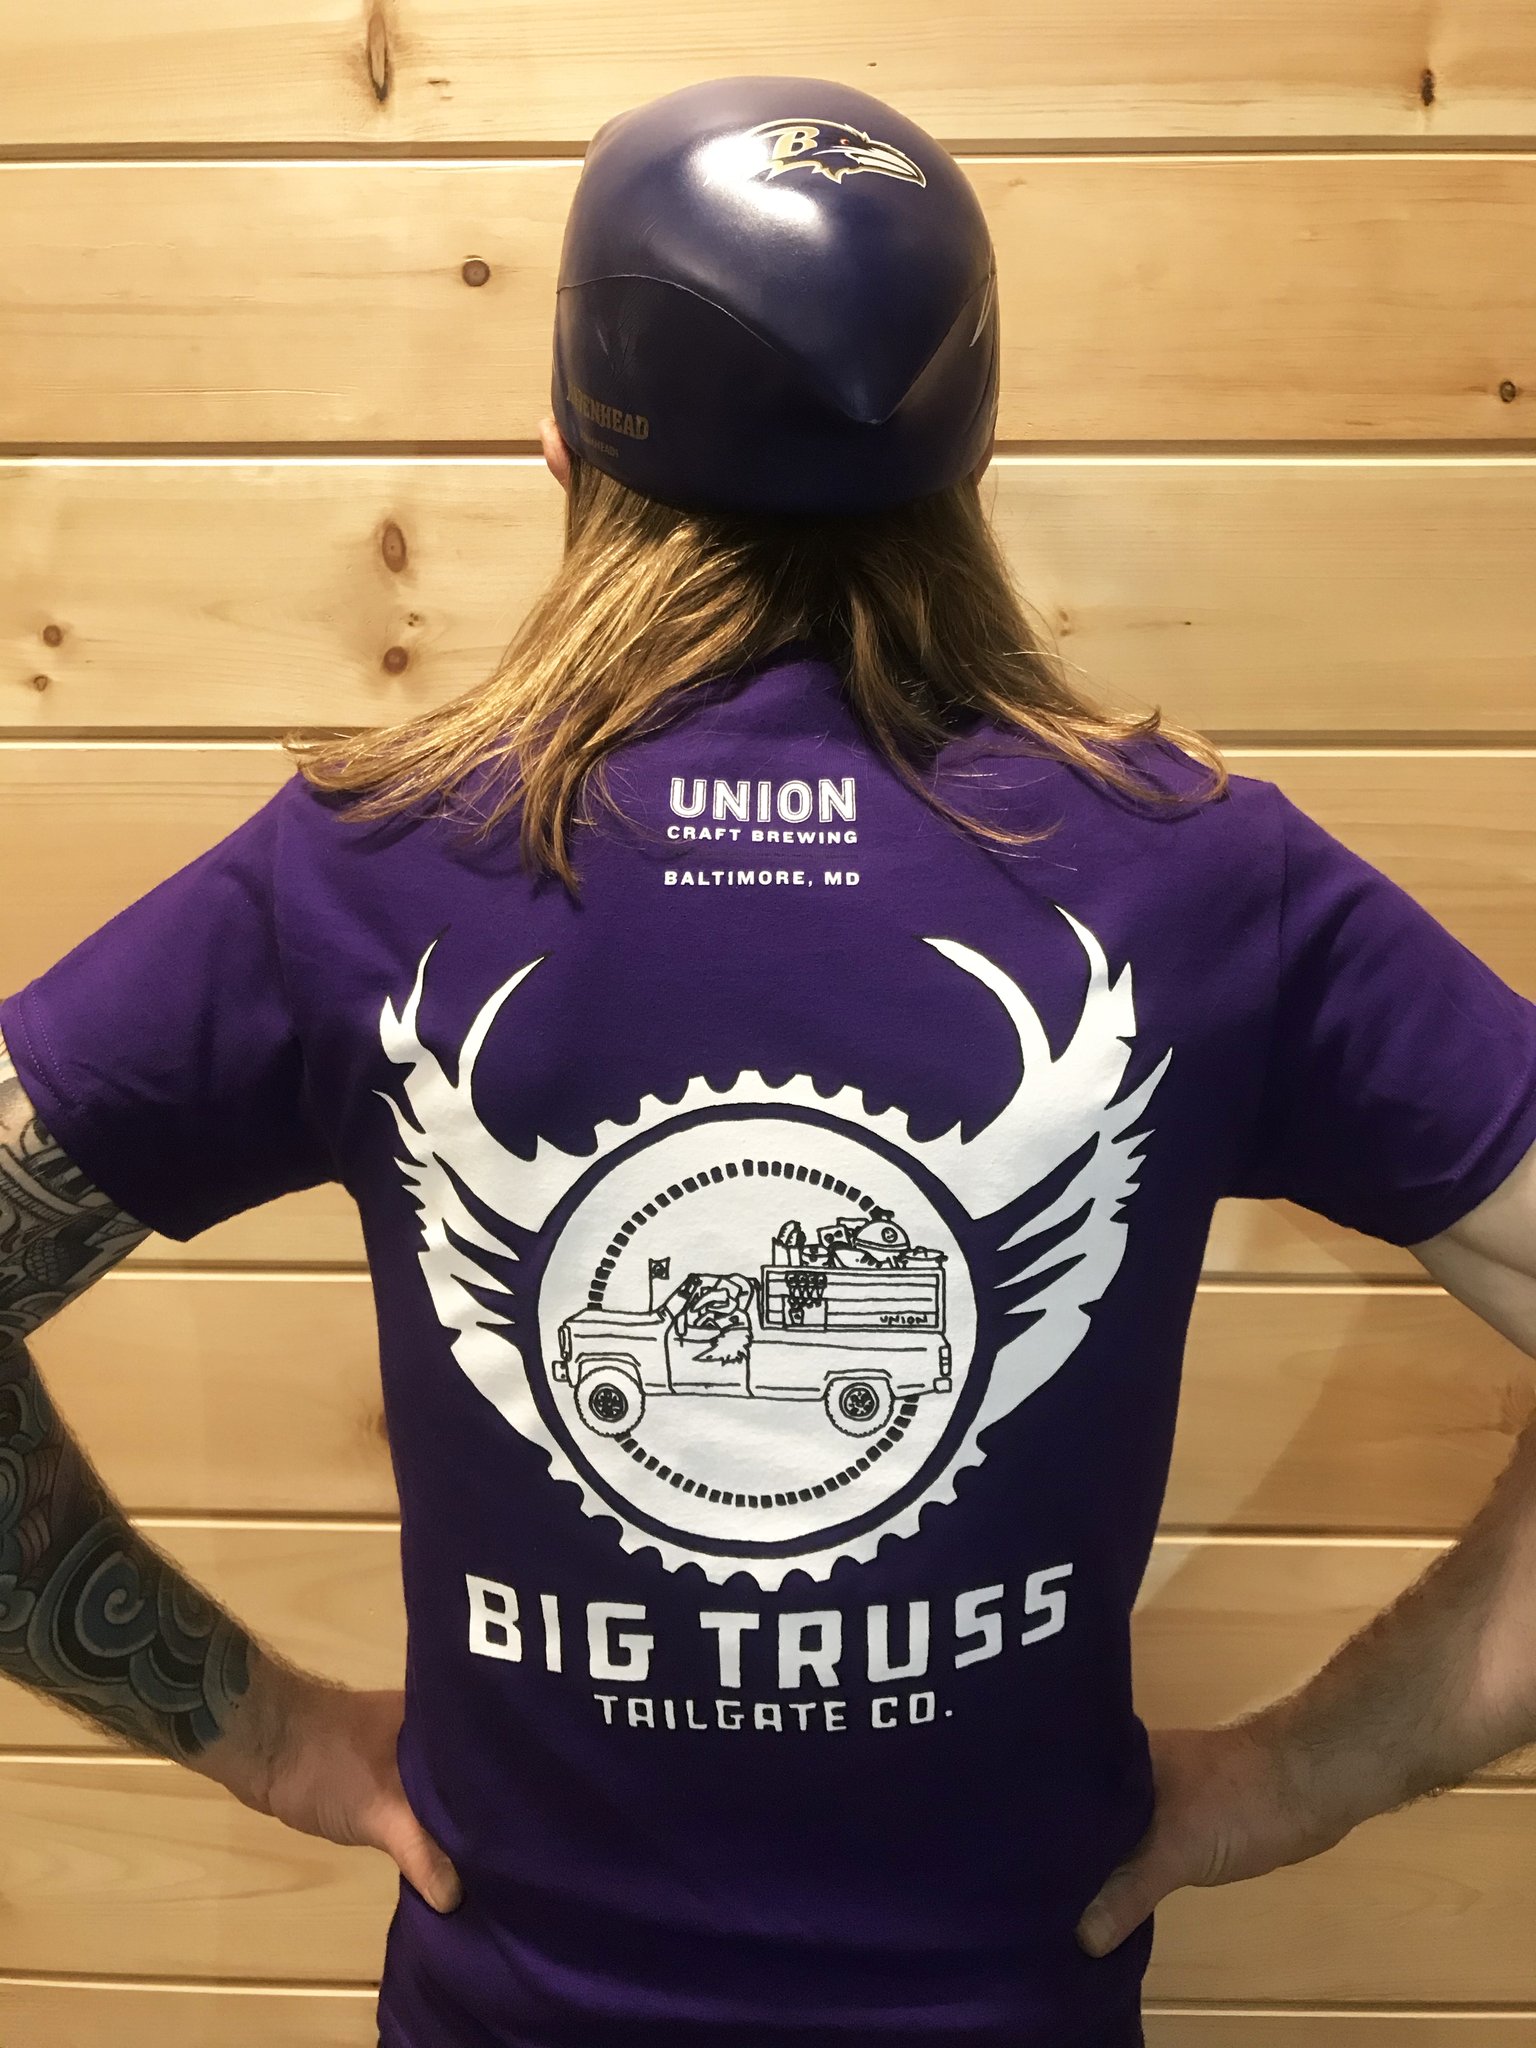 union craft shirt